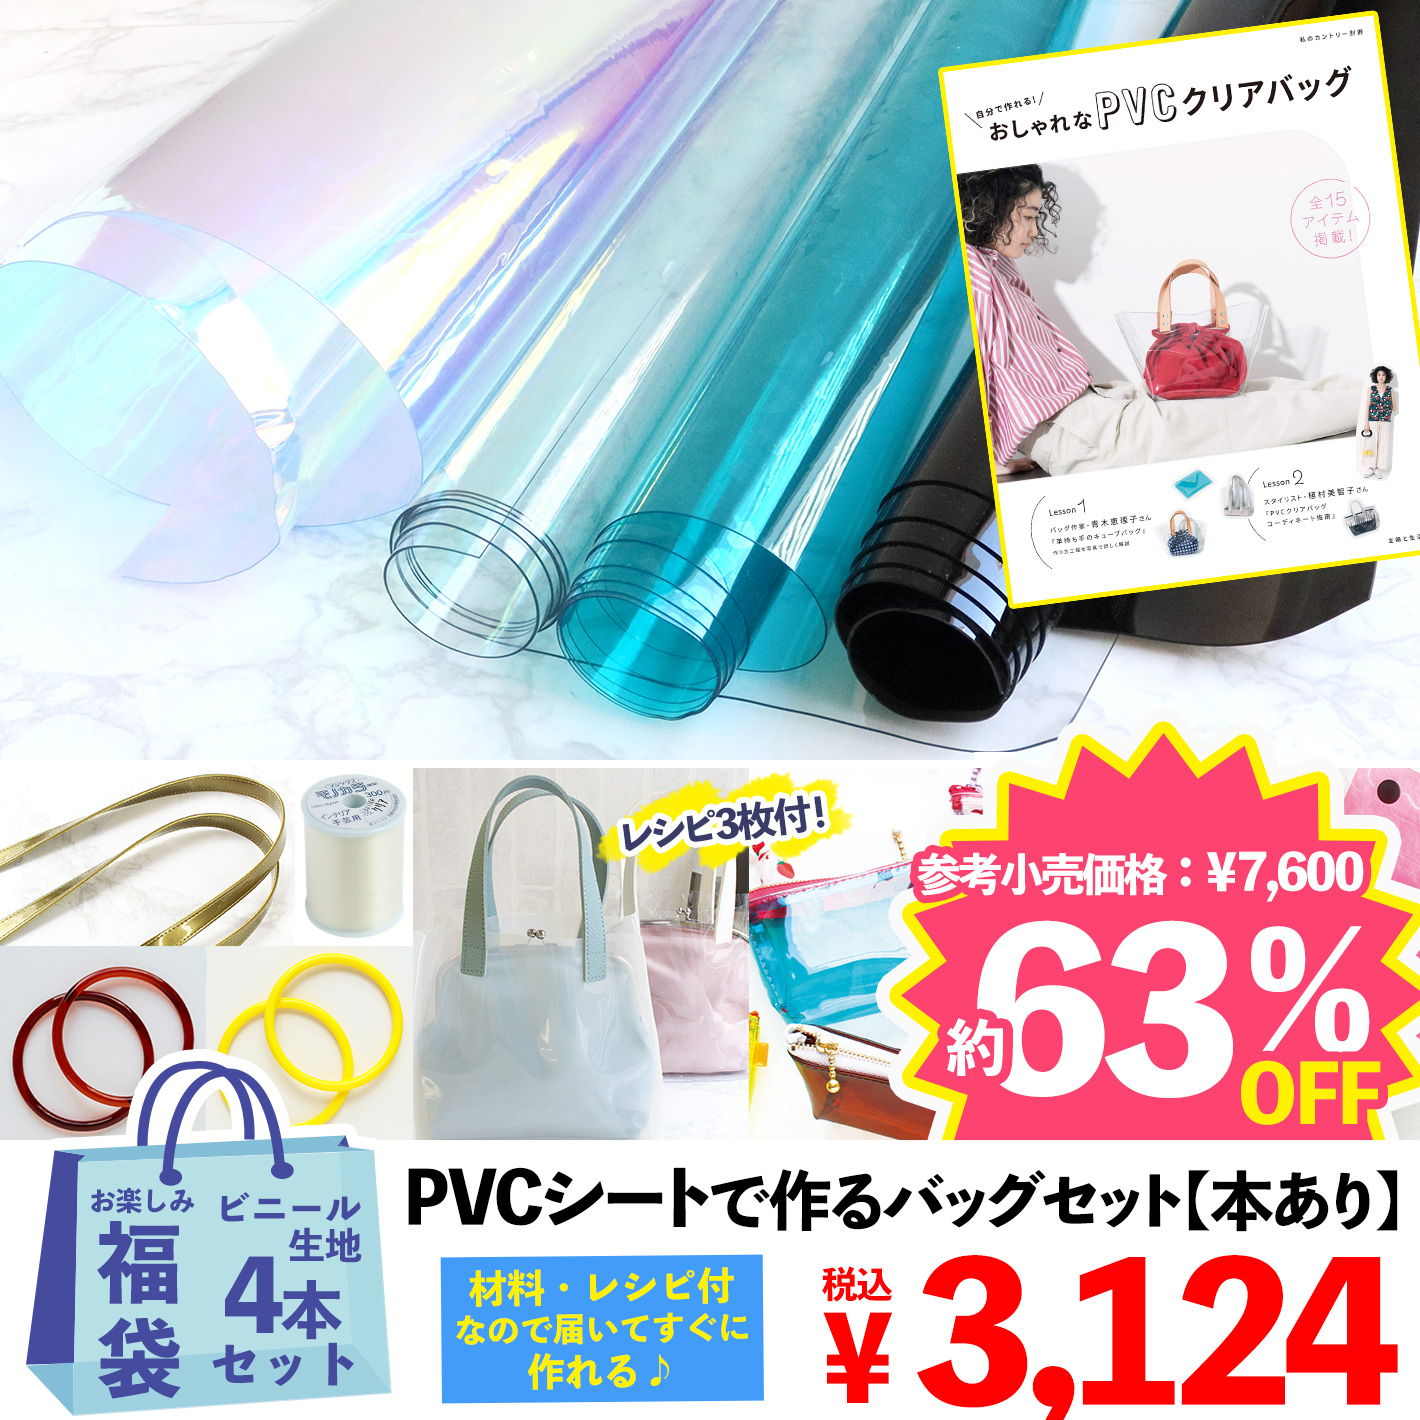 FUK-454 PVCビニールで作るバッグセット【本あり】 【2022年お楽しみ袋】 (袋)